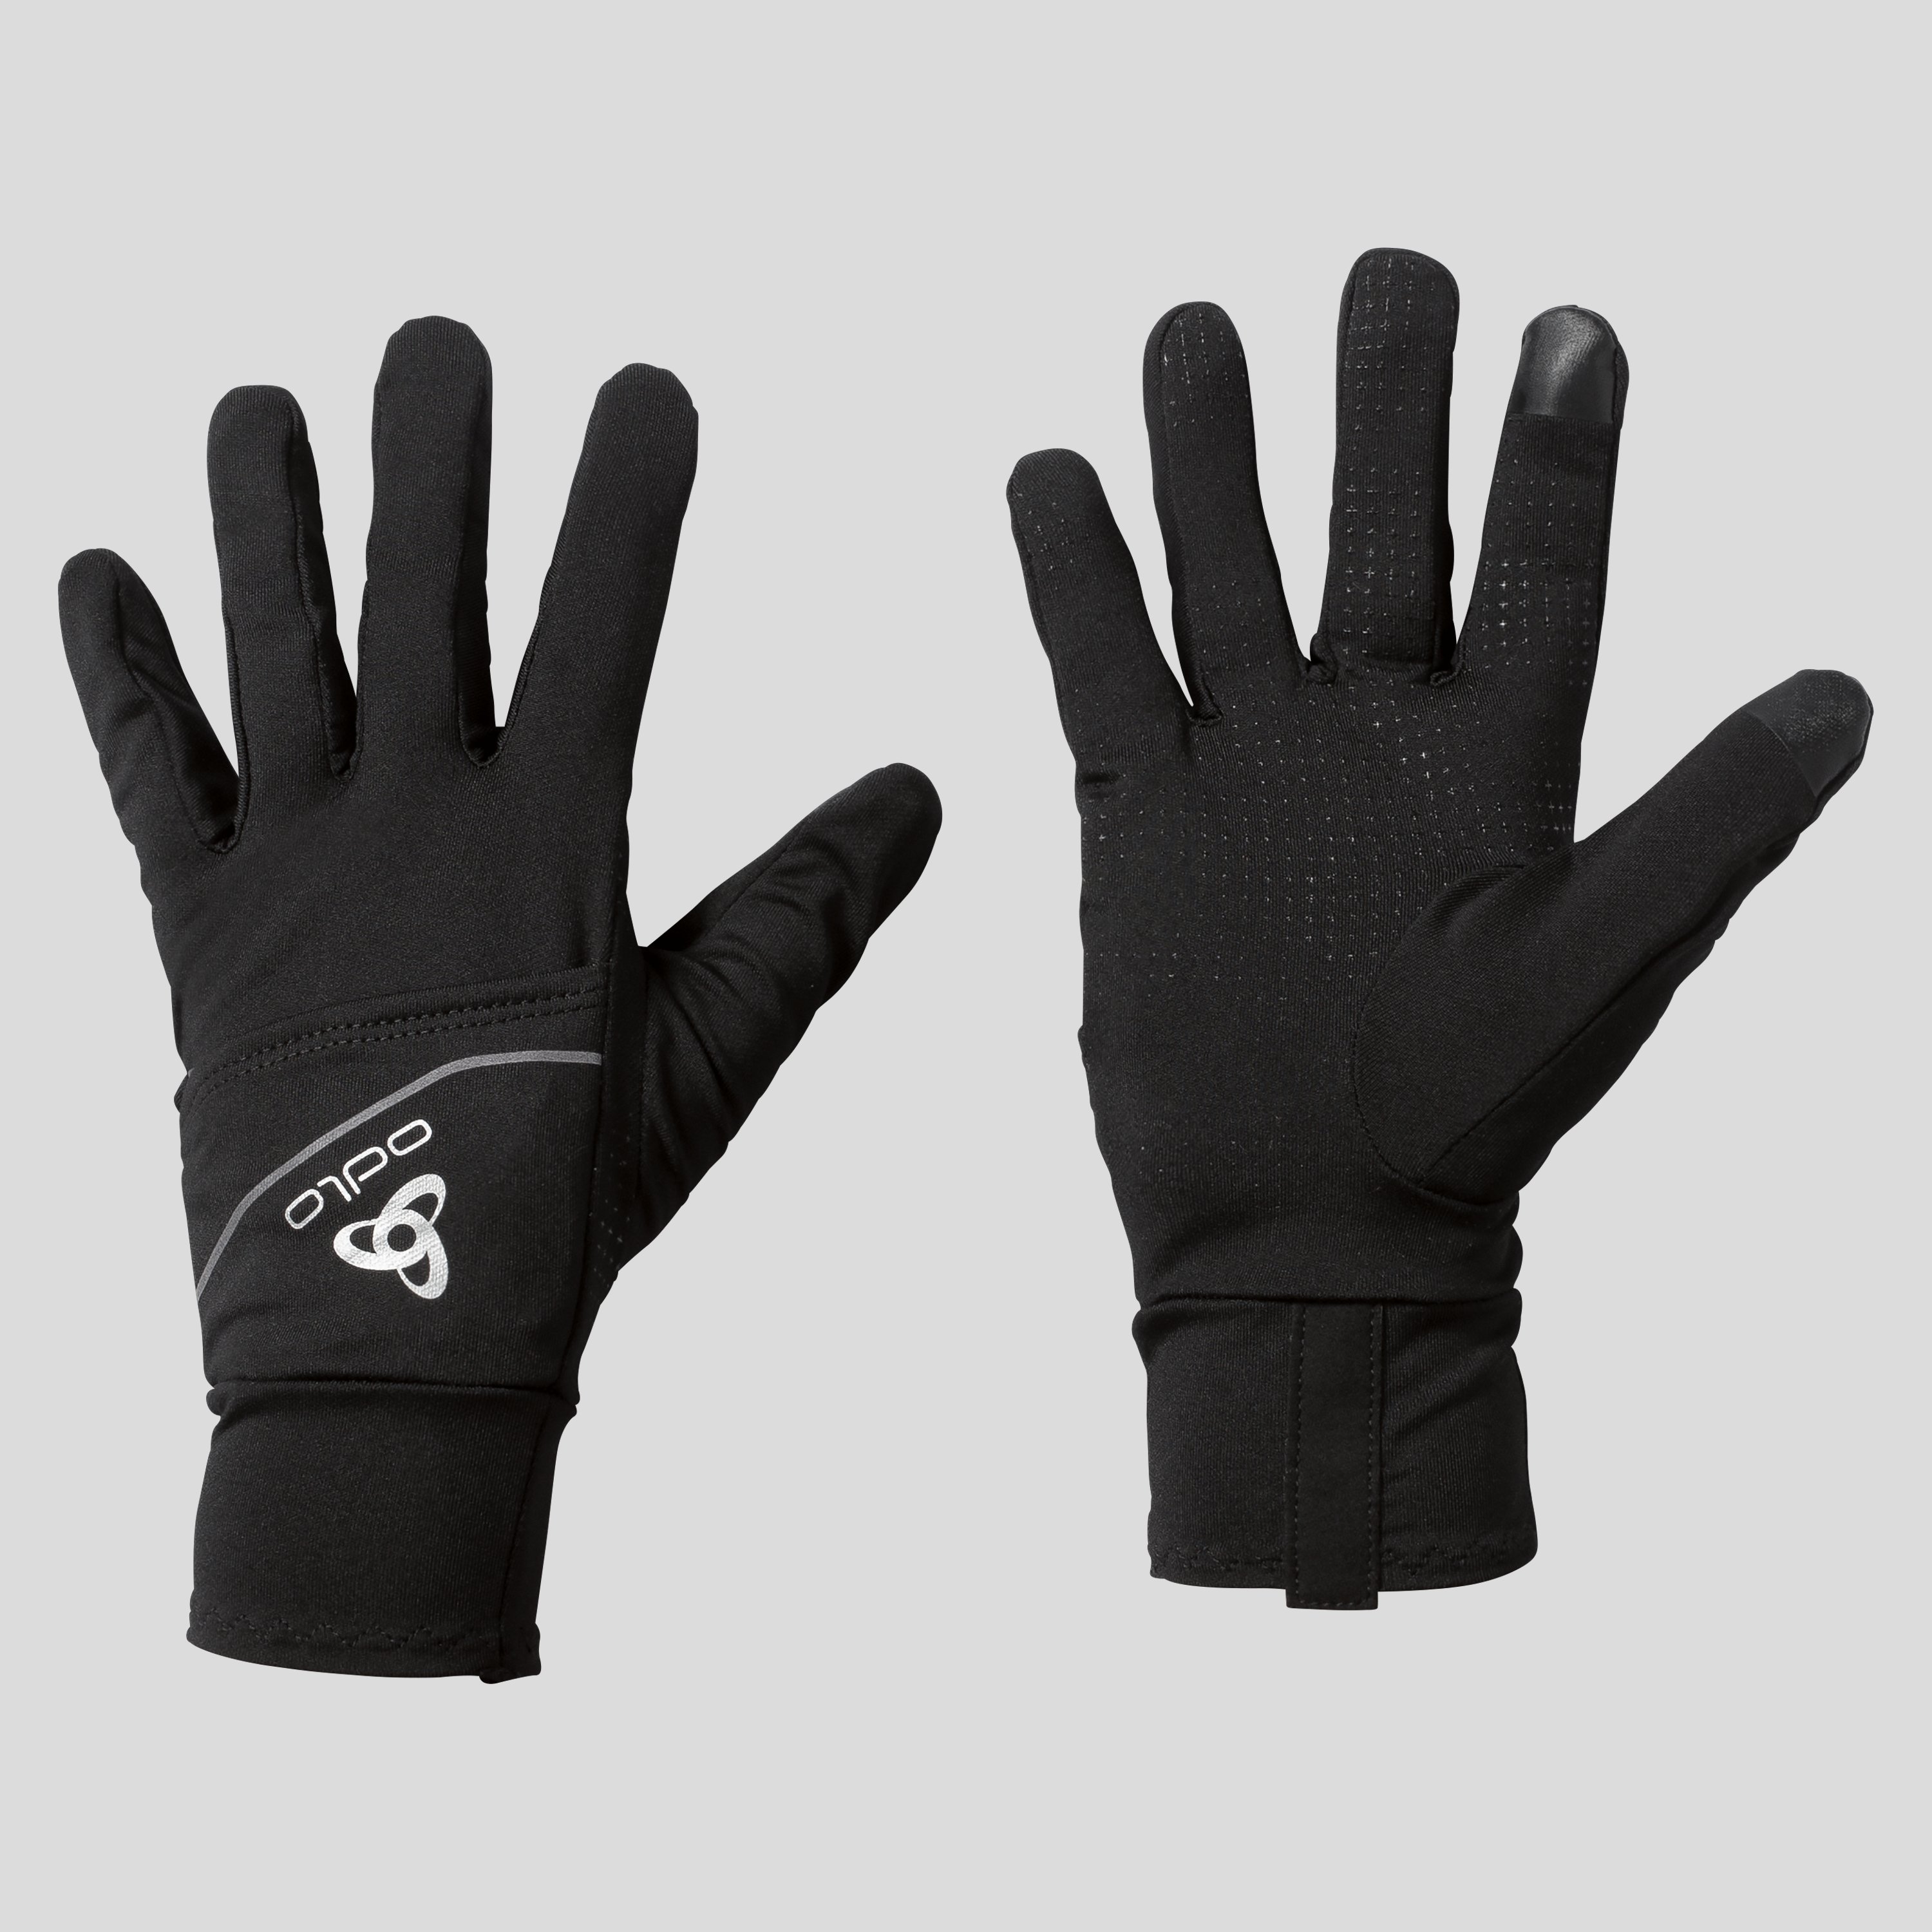 ODLO Intensity Cover Safety Light Handschuhe, S, schwarz